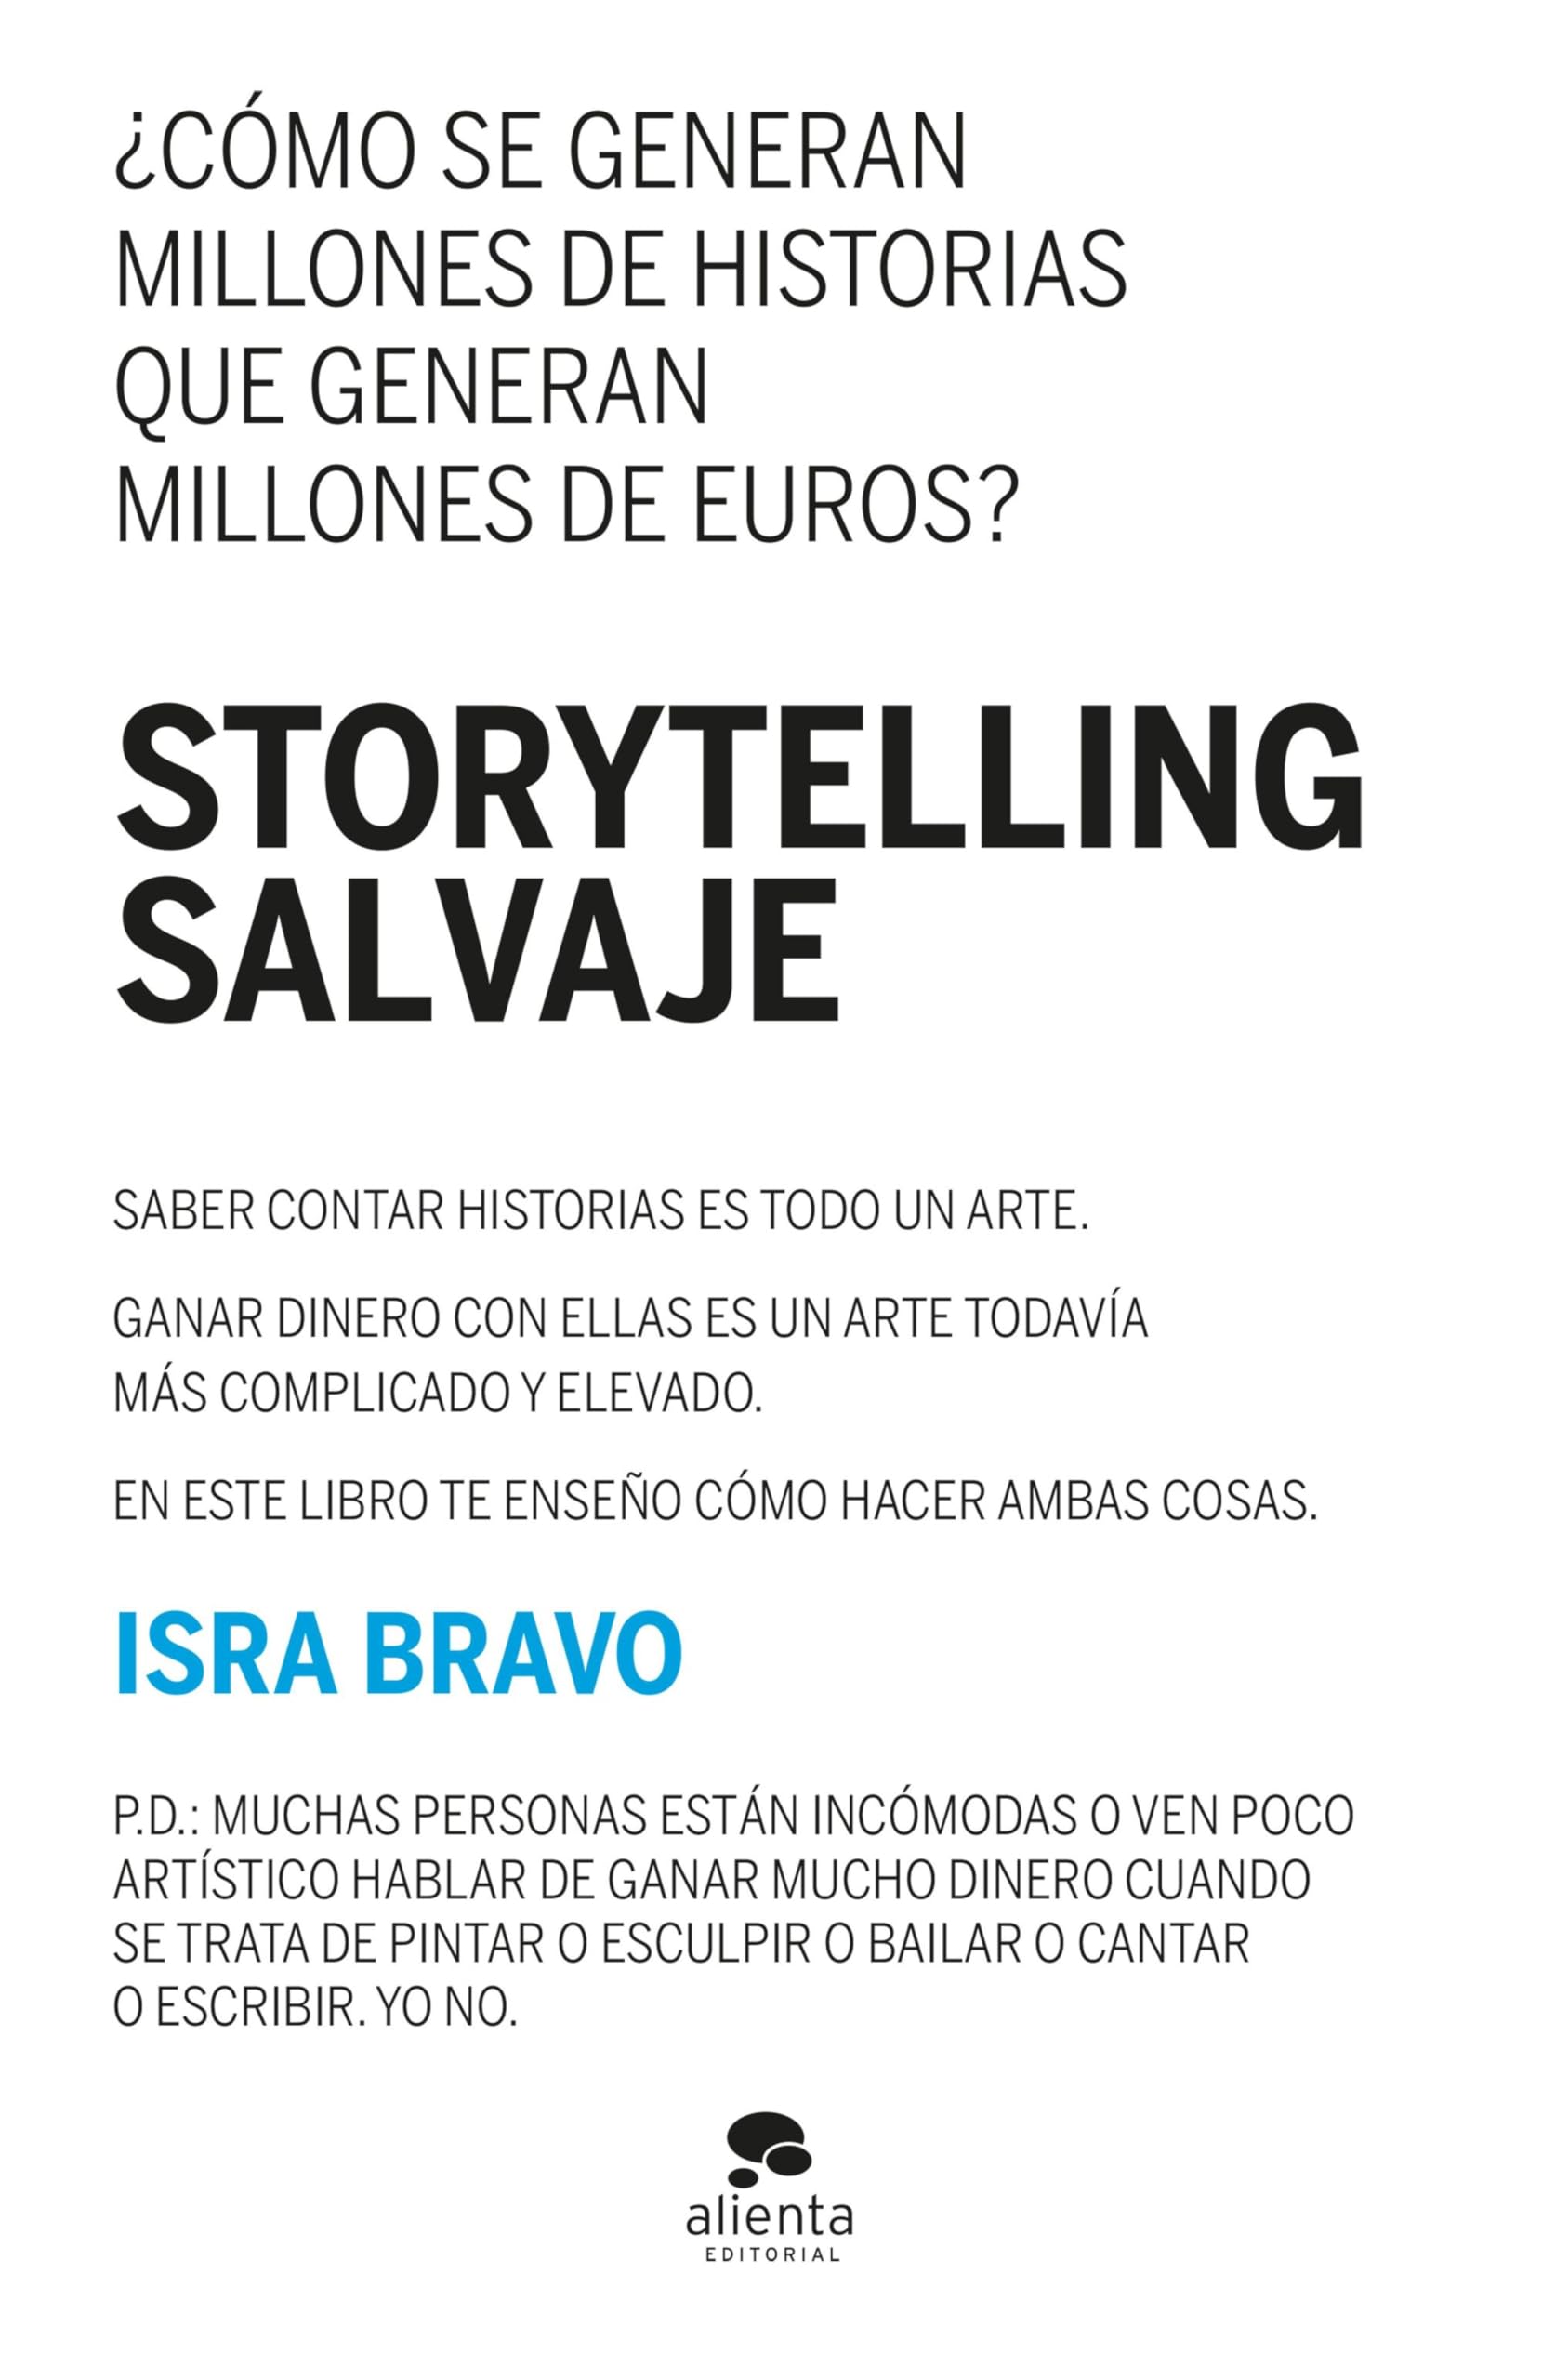 Storytelling salvaje (Alienta) (Spanish Edition)